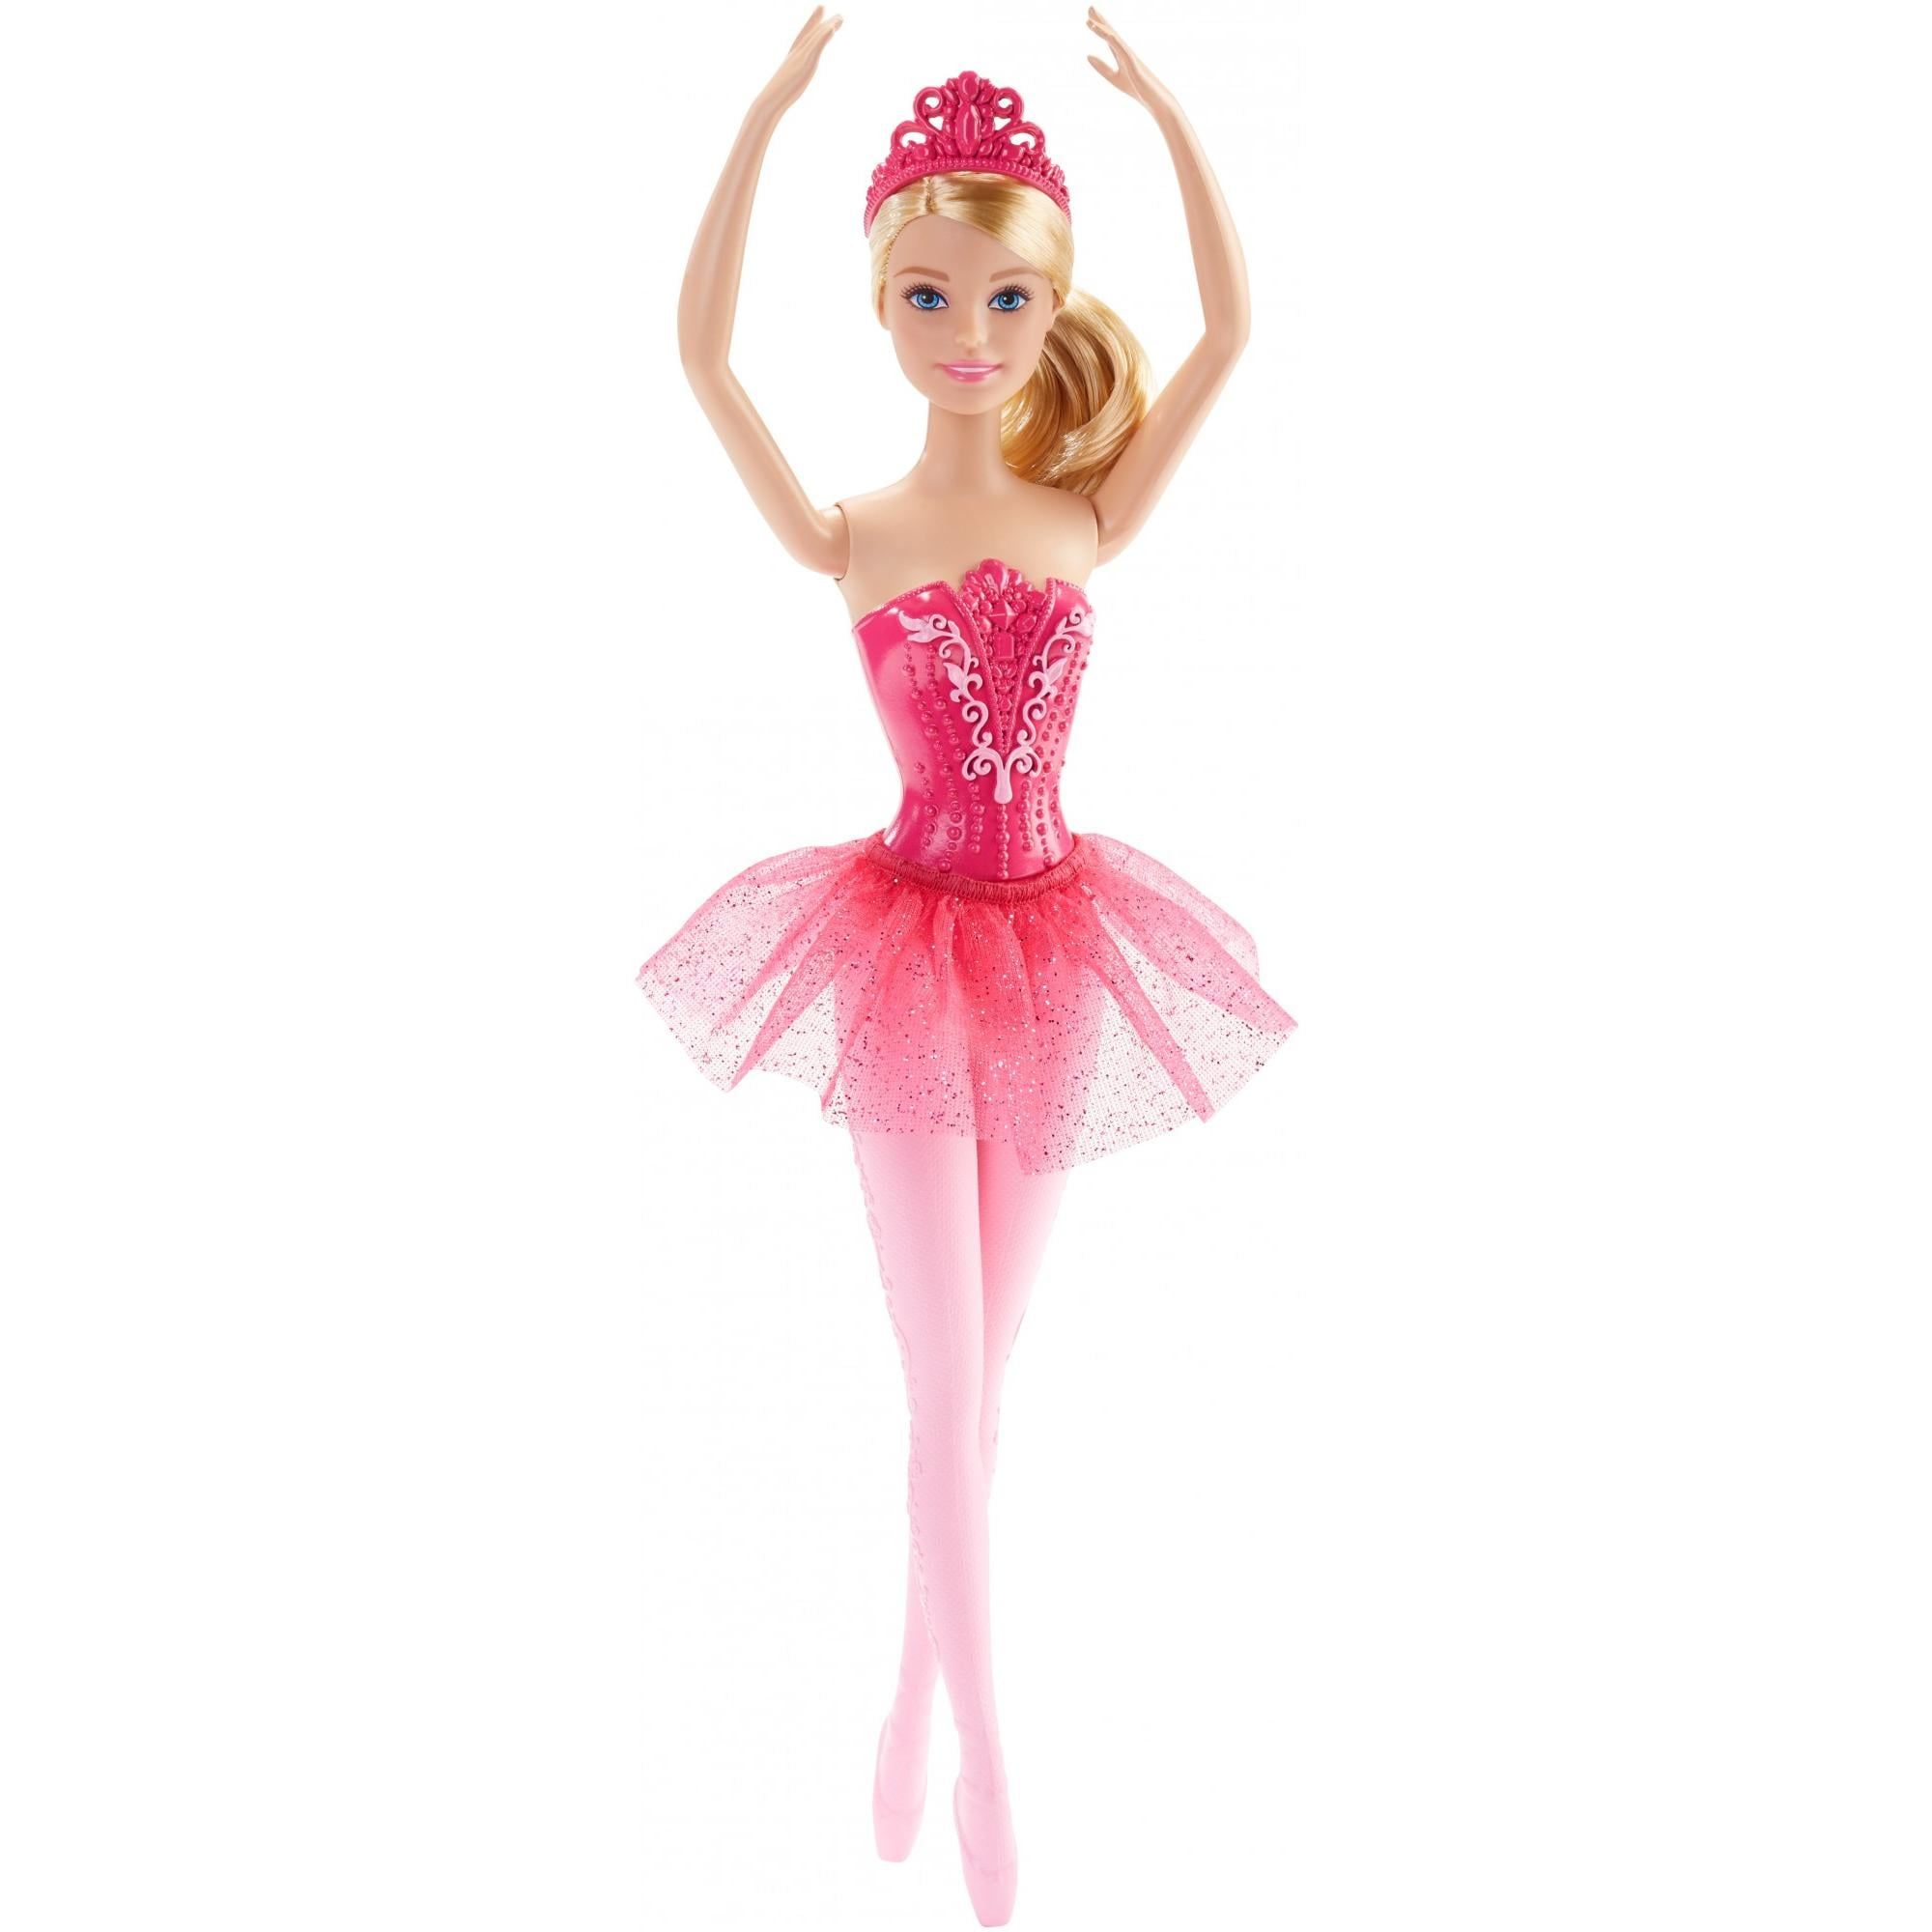 Barbie Ballerina Doll with Removable Pink Tutu & Tiara